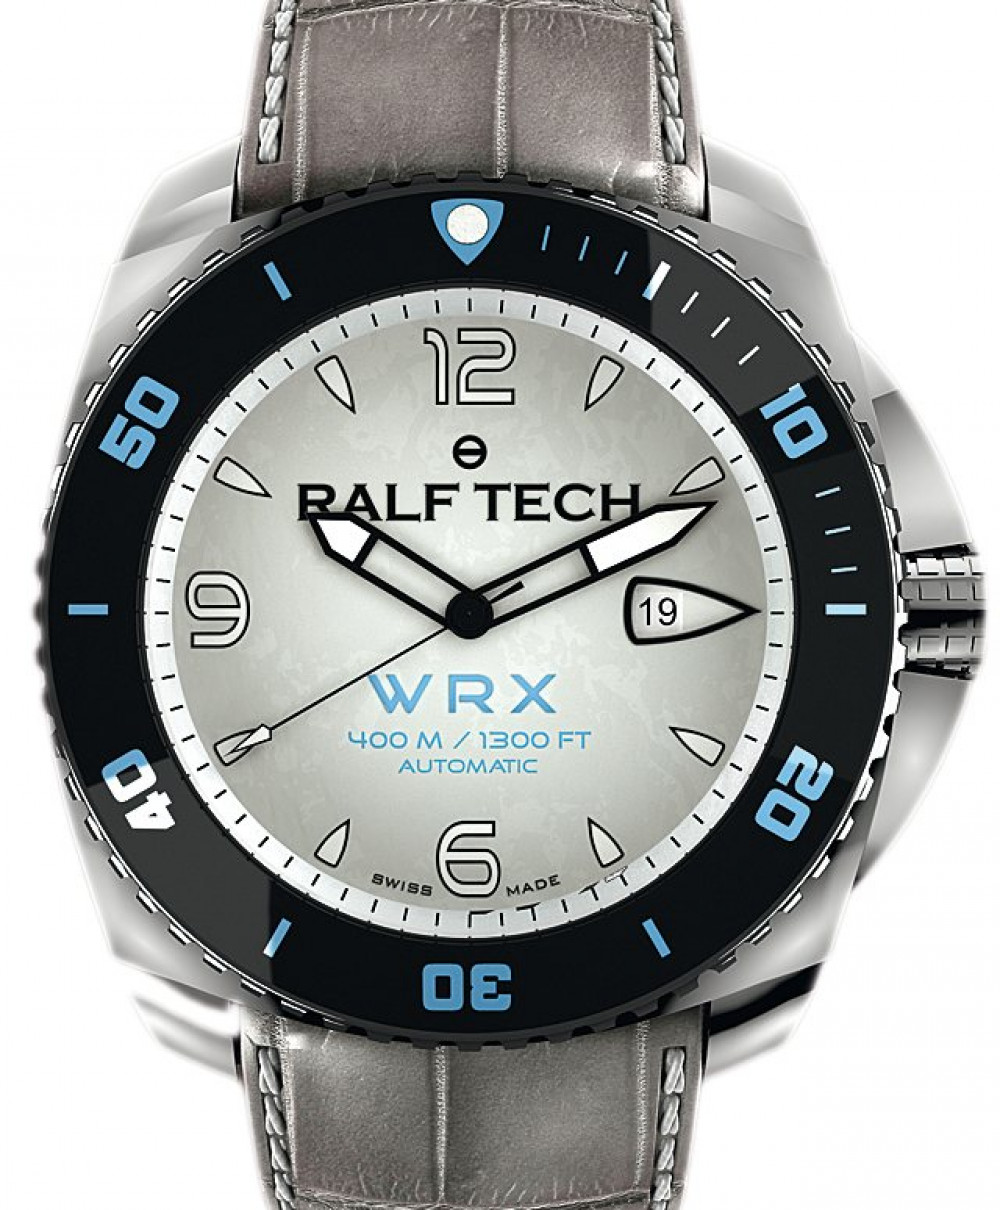 Zegarek firmy Ralf Tech, model WRX Sunrise Explorer